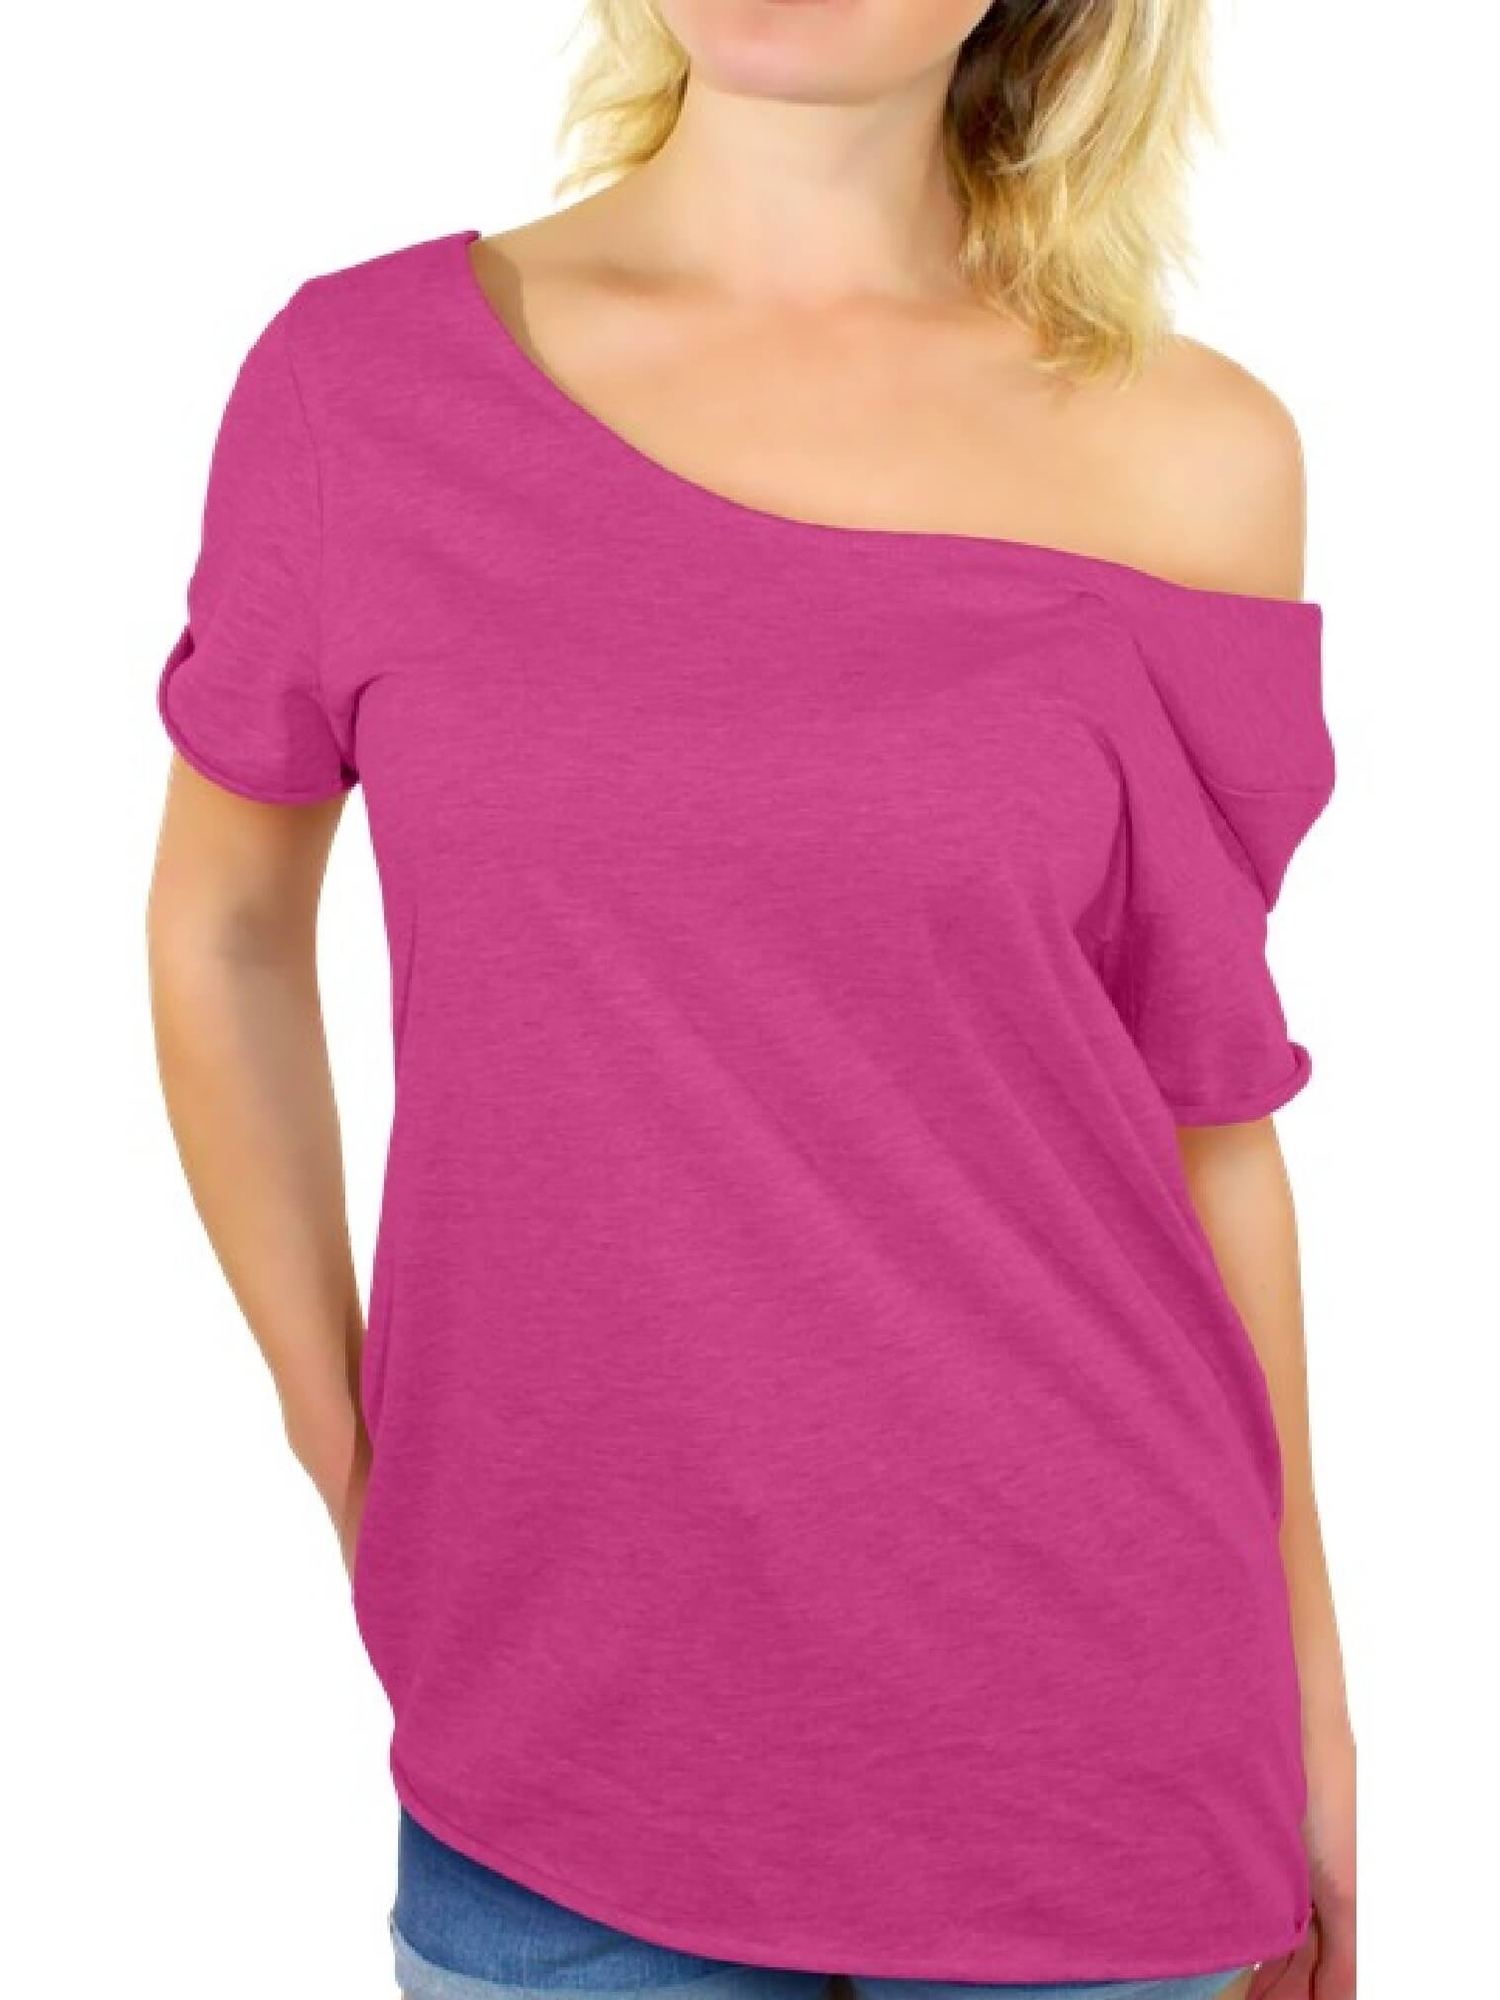 GYUJNB T Shirts for Women Tops For Women Off The Shoulder Cold Shoulder ...